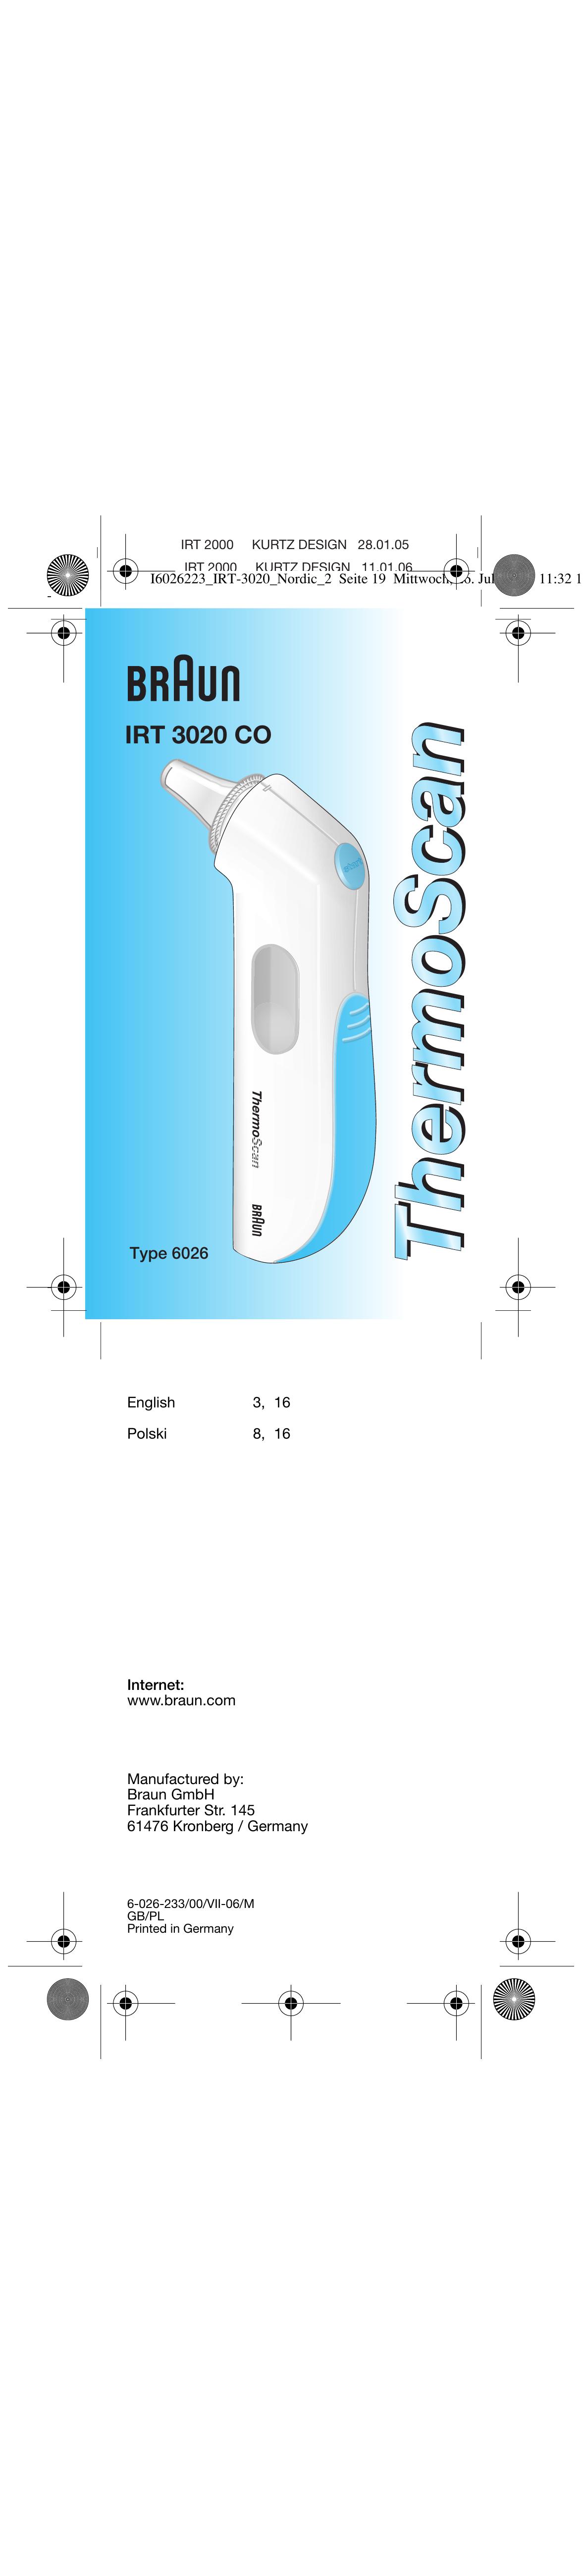 Braun 6026 Thermometer User Manual